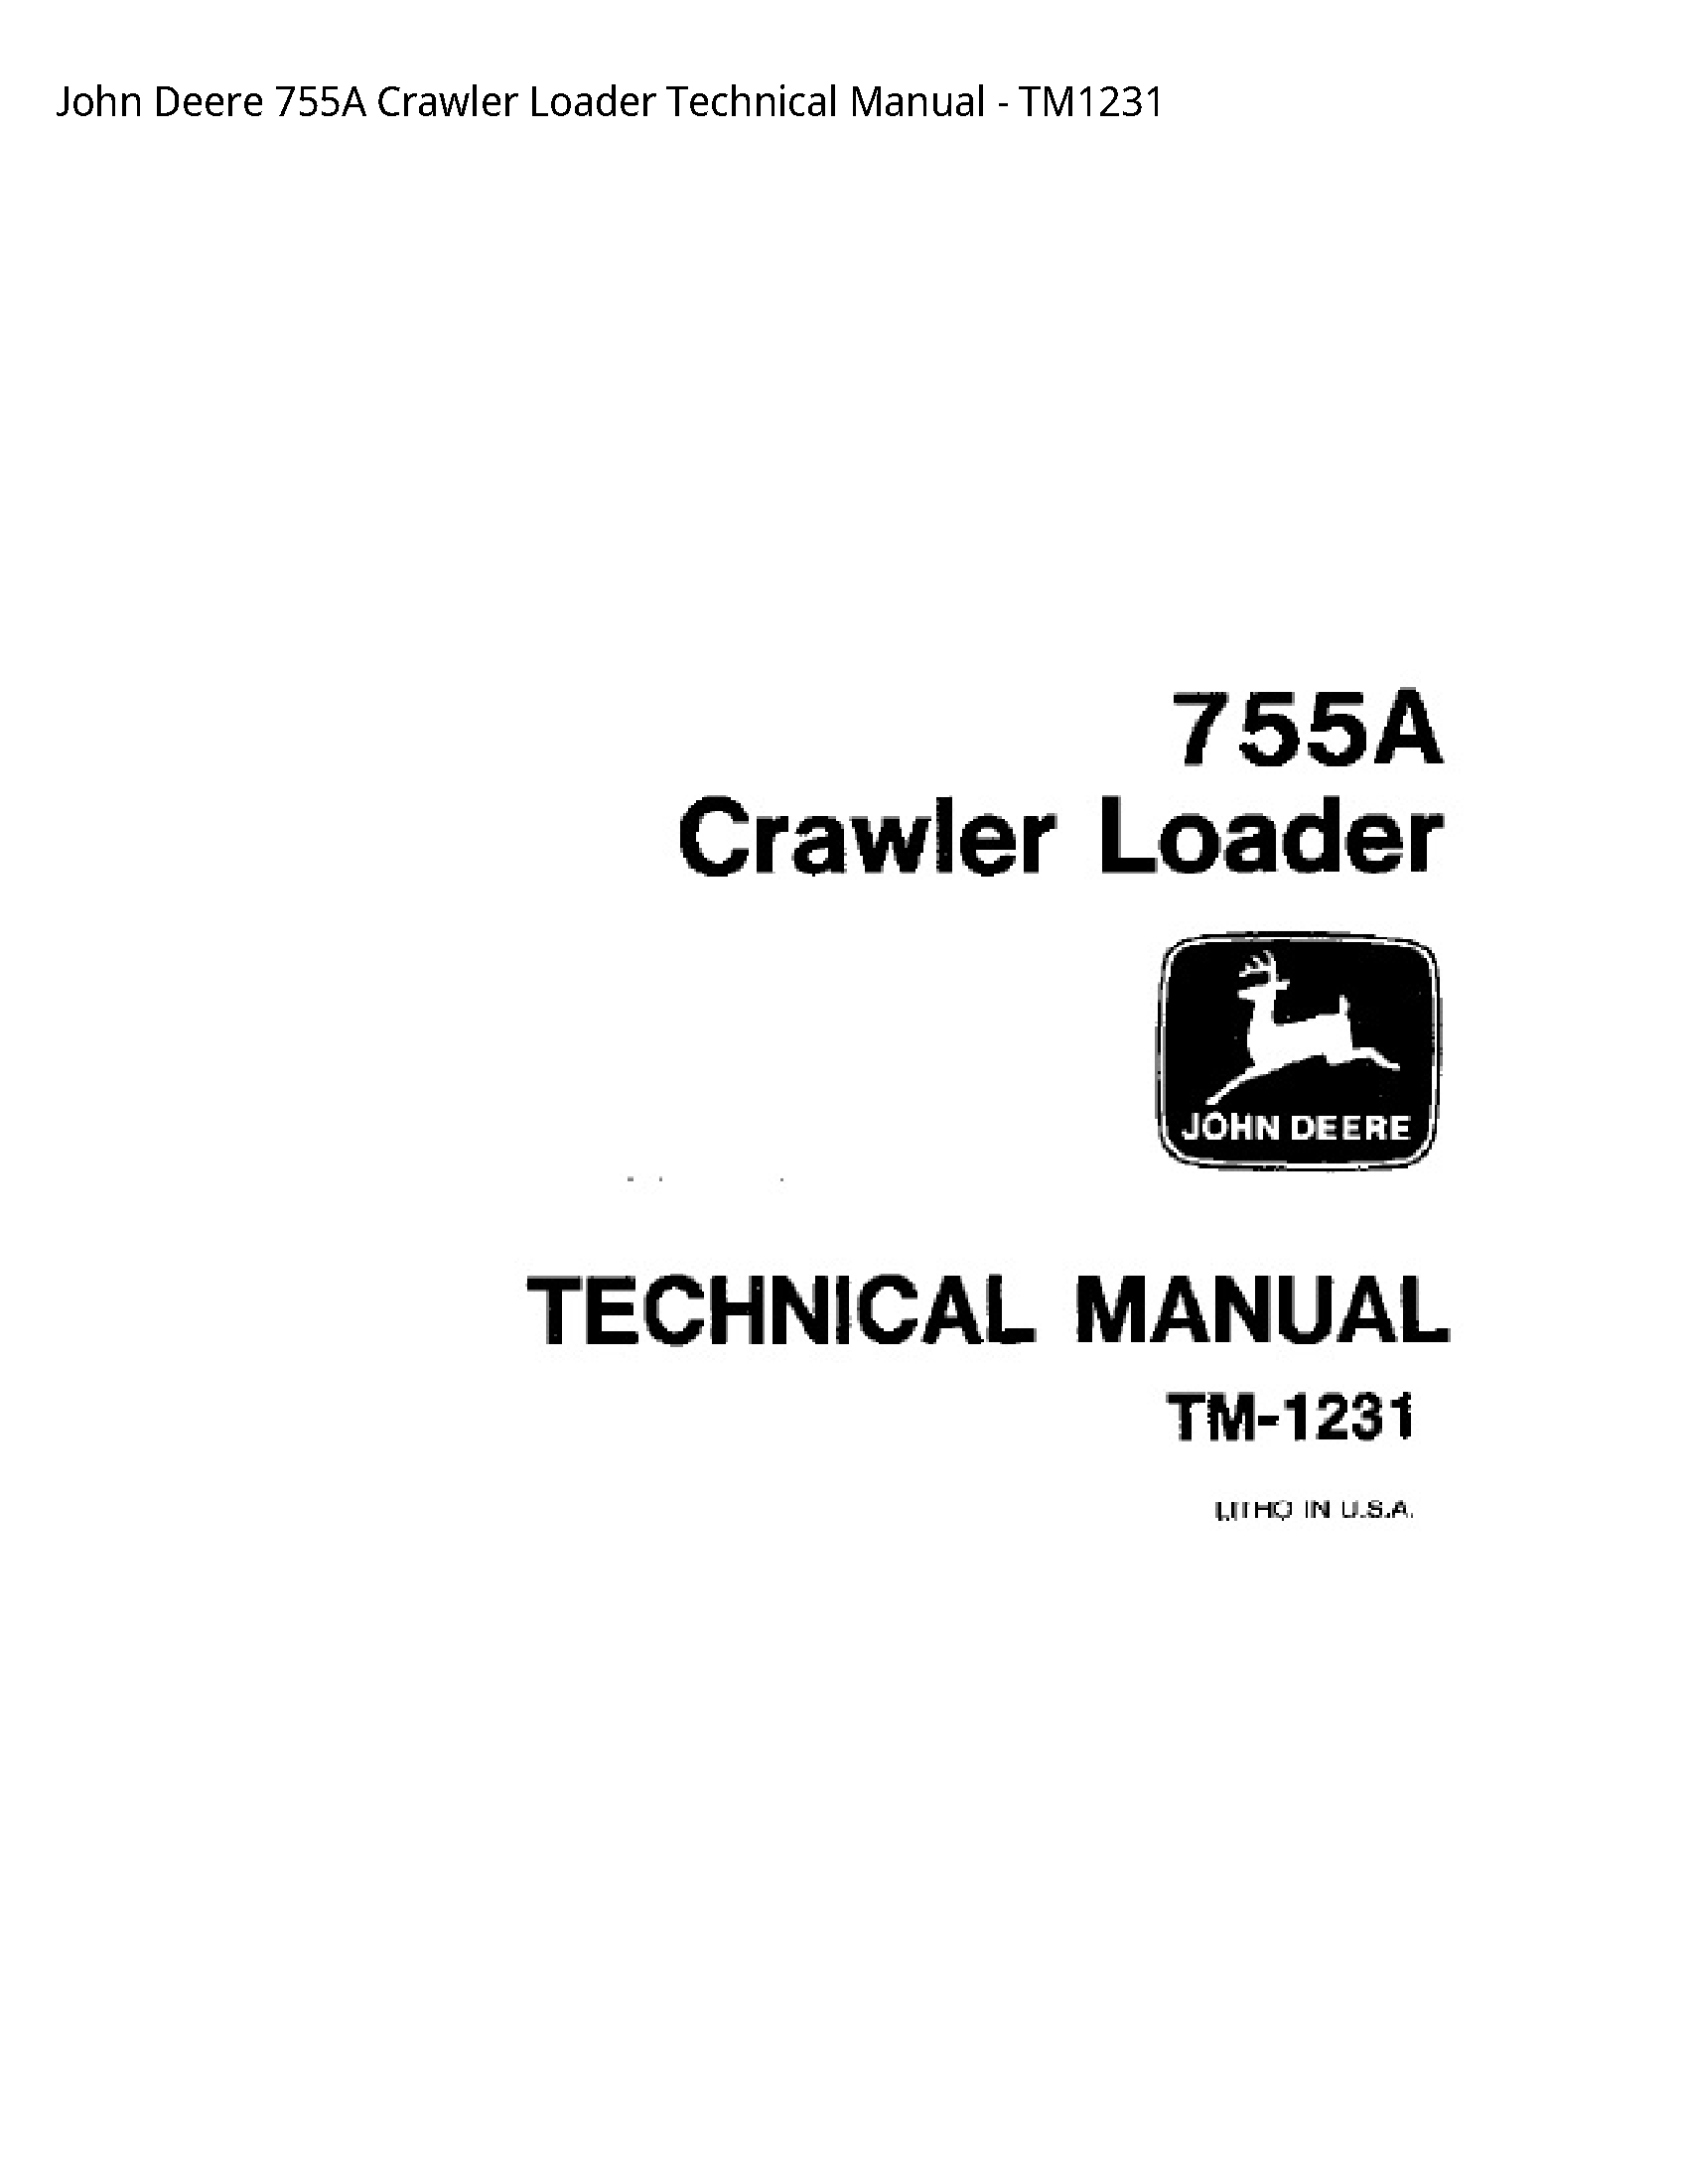 John Deere 755A Crawler Loader Technical manual